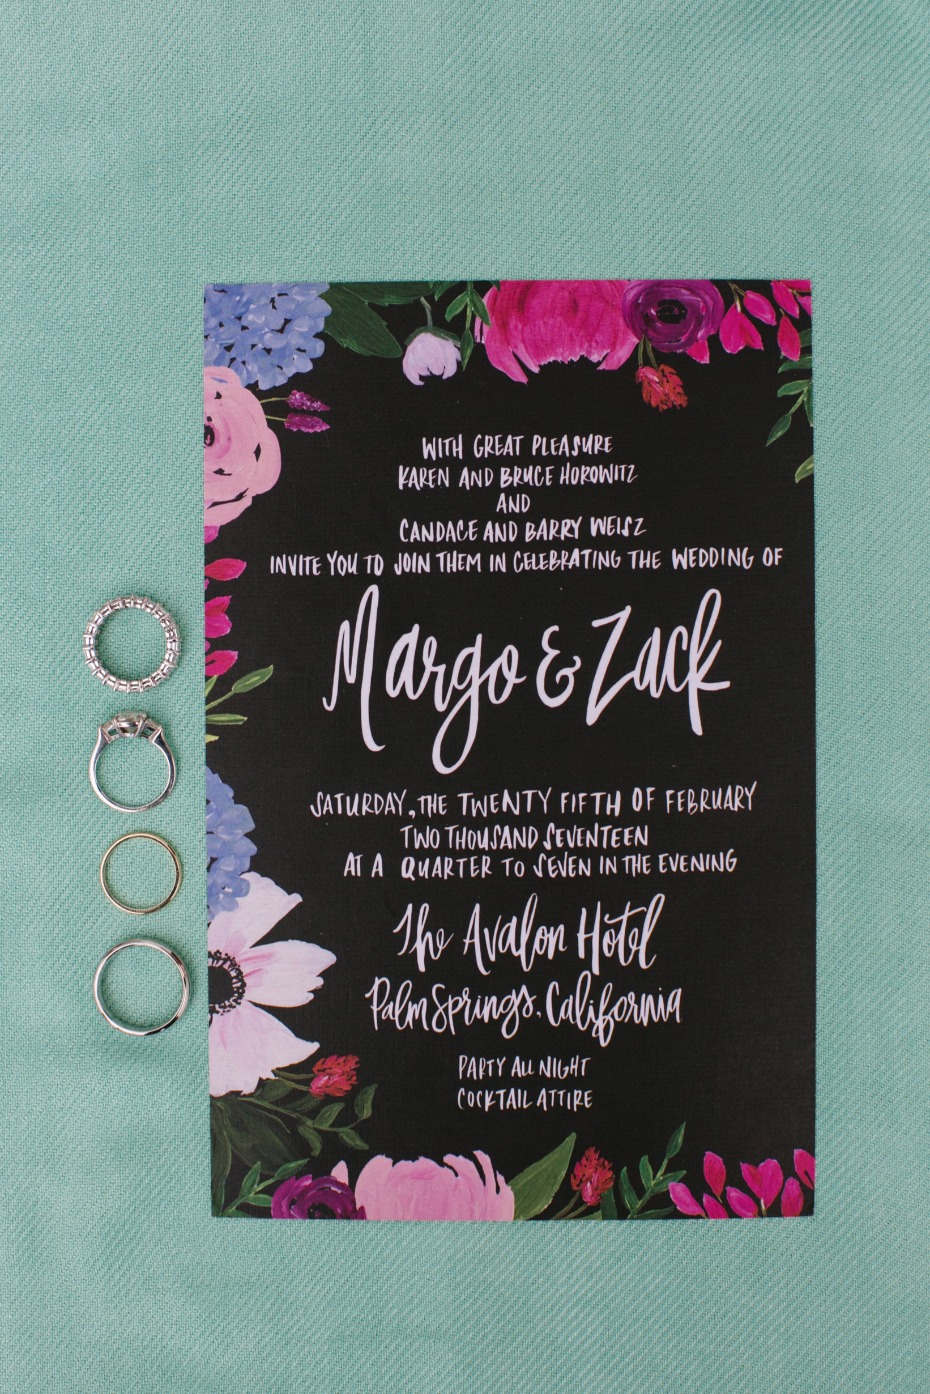 Jewel toned wedding invitation